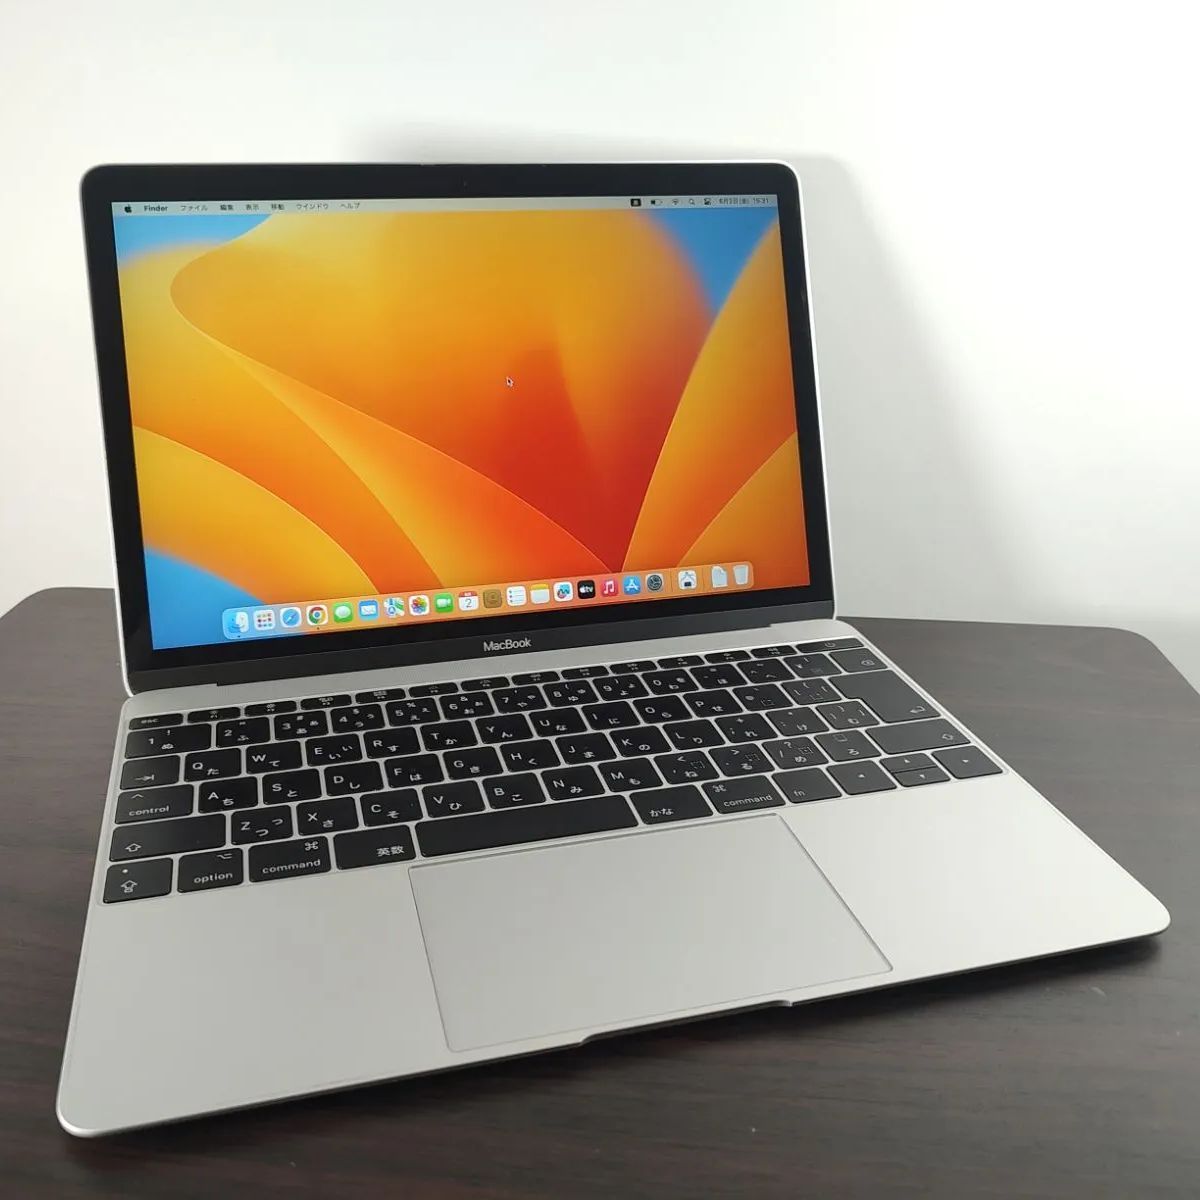 MacBook 12インチ 2017  M3 メモリ8GB SSD256GB